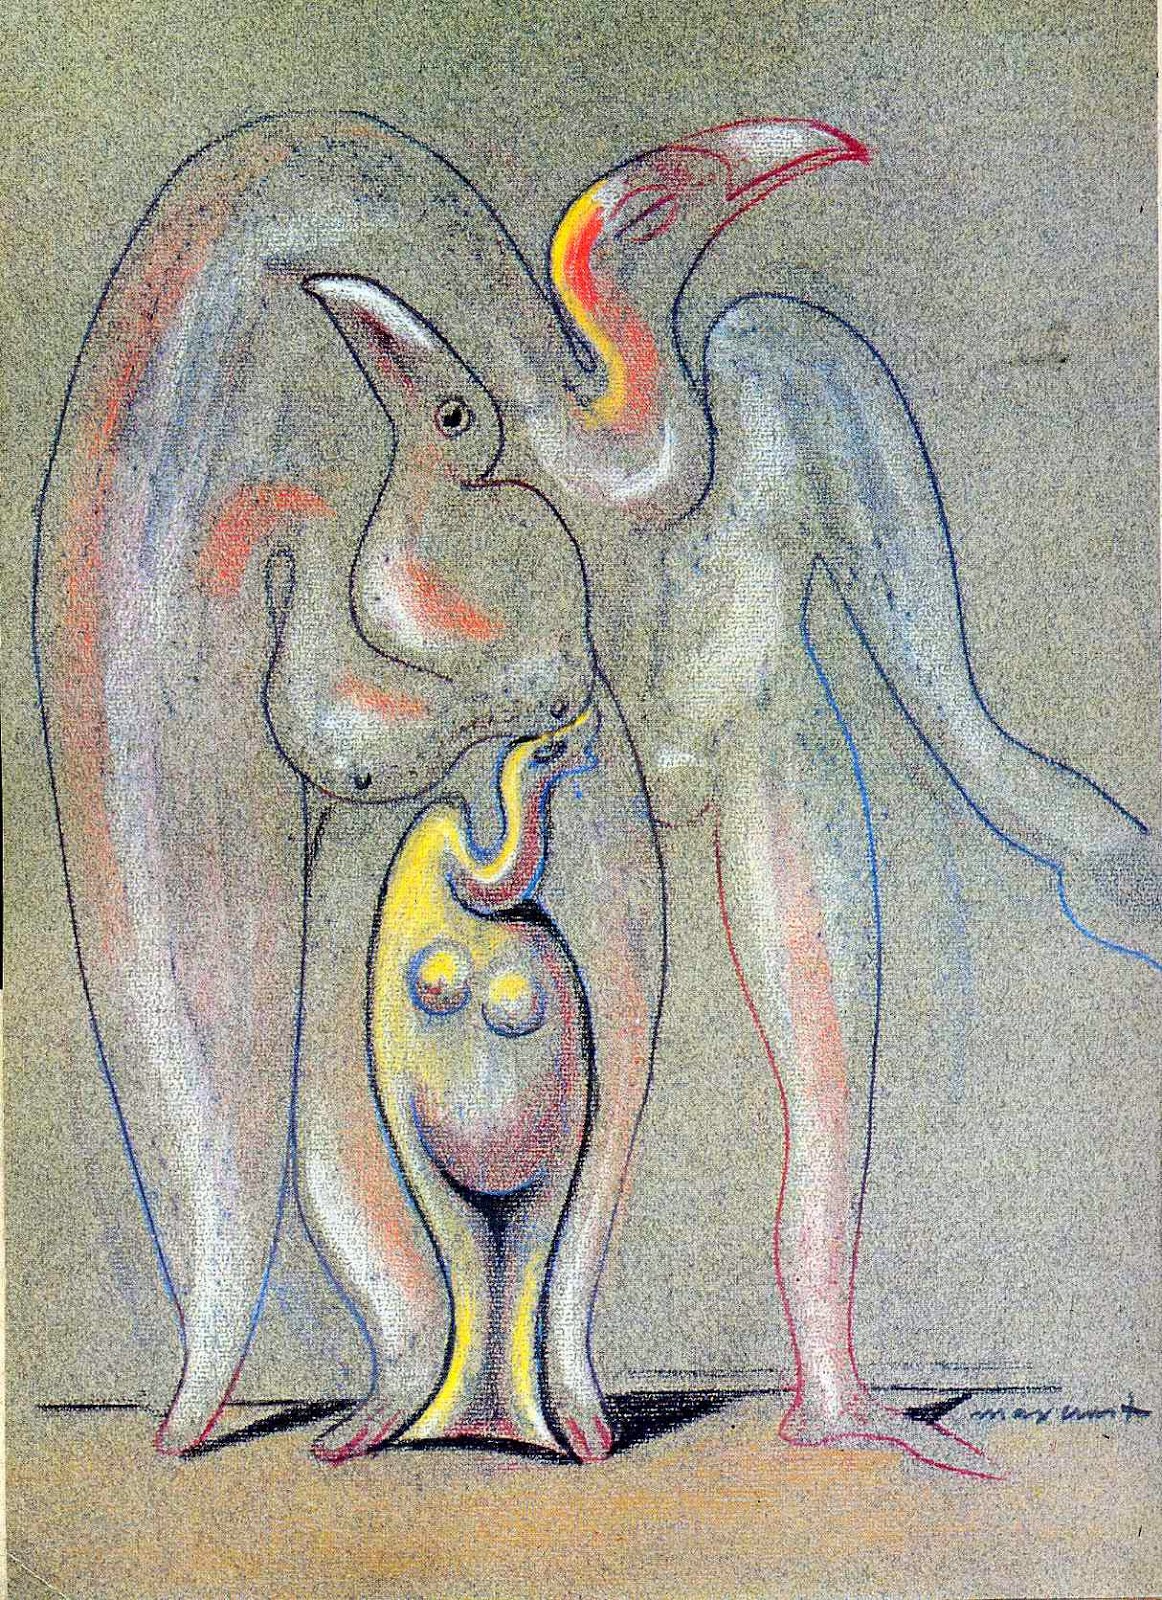 Composition (Max Ernst, 1943)